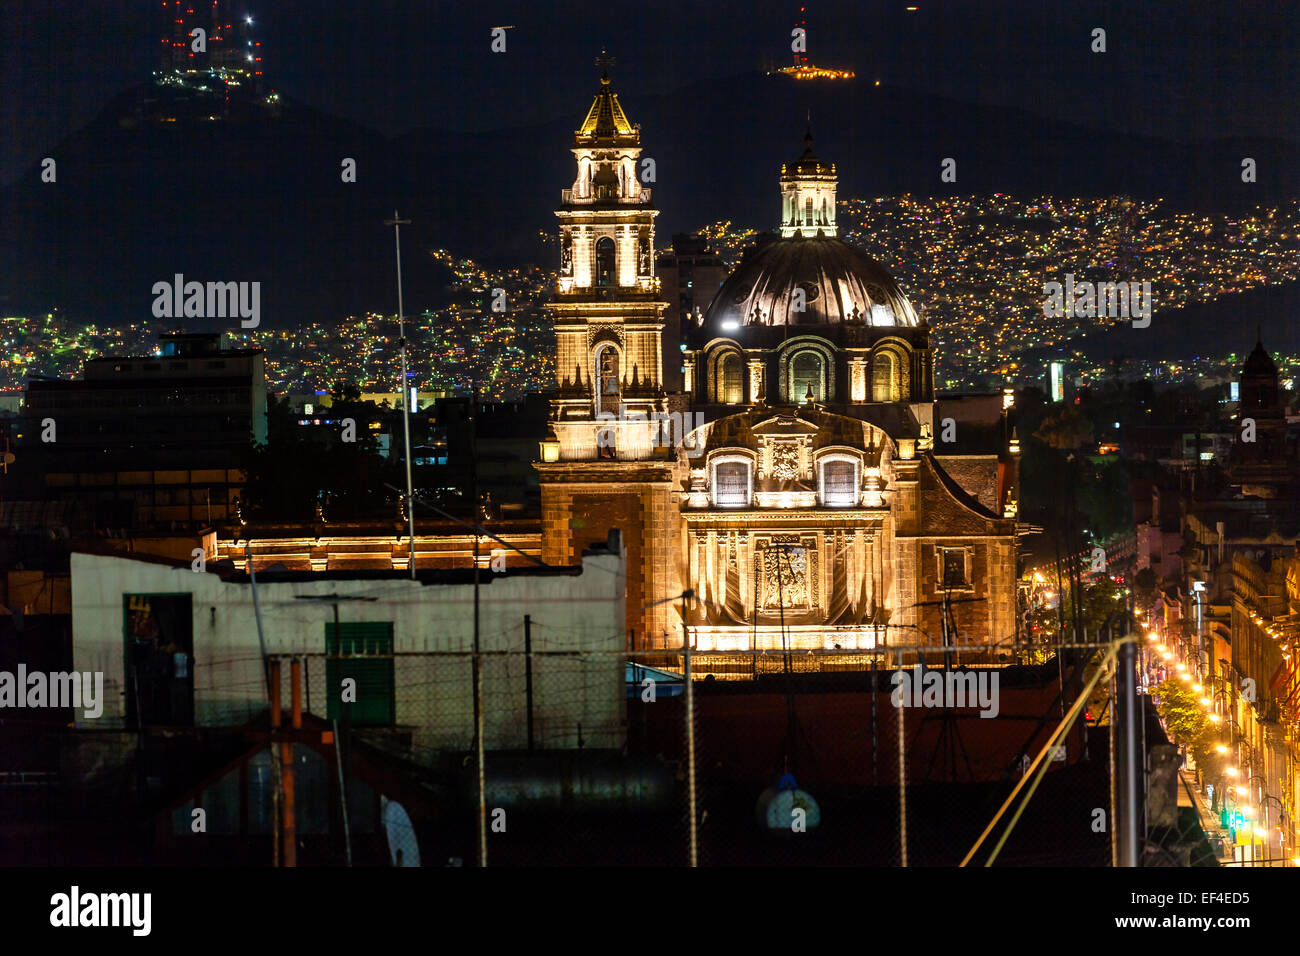 Plaza de Santa Domingo Kirchen Lichter Zocalo Zentrum von Mexico City Christmas Night Stockfoto